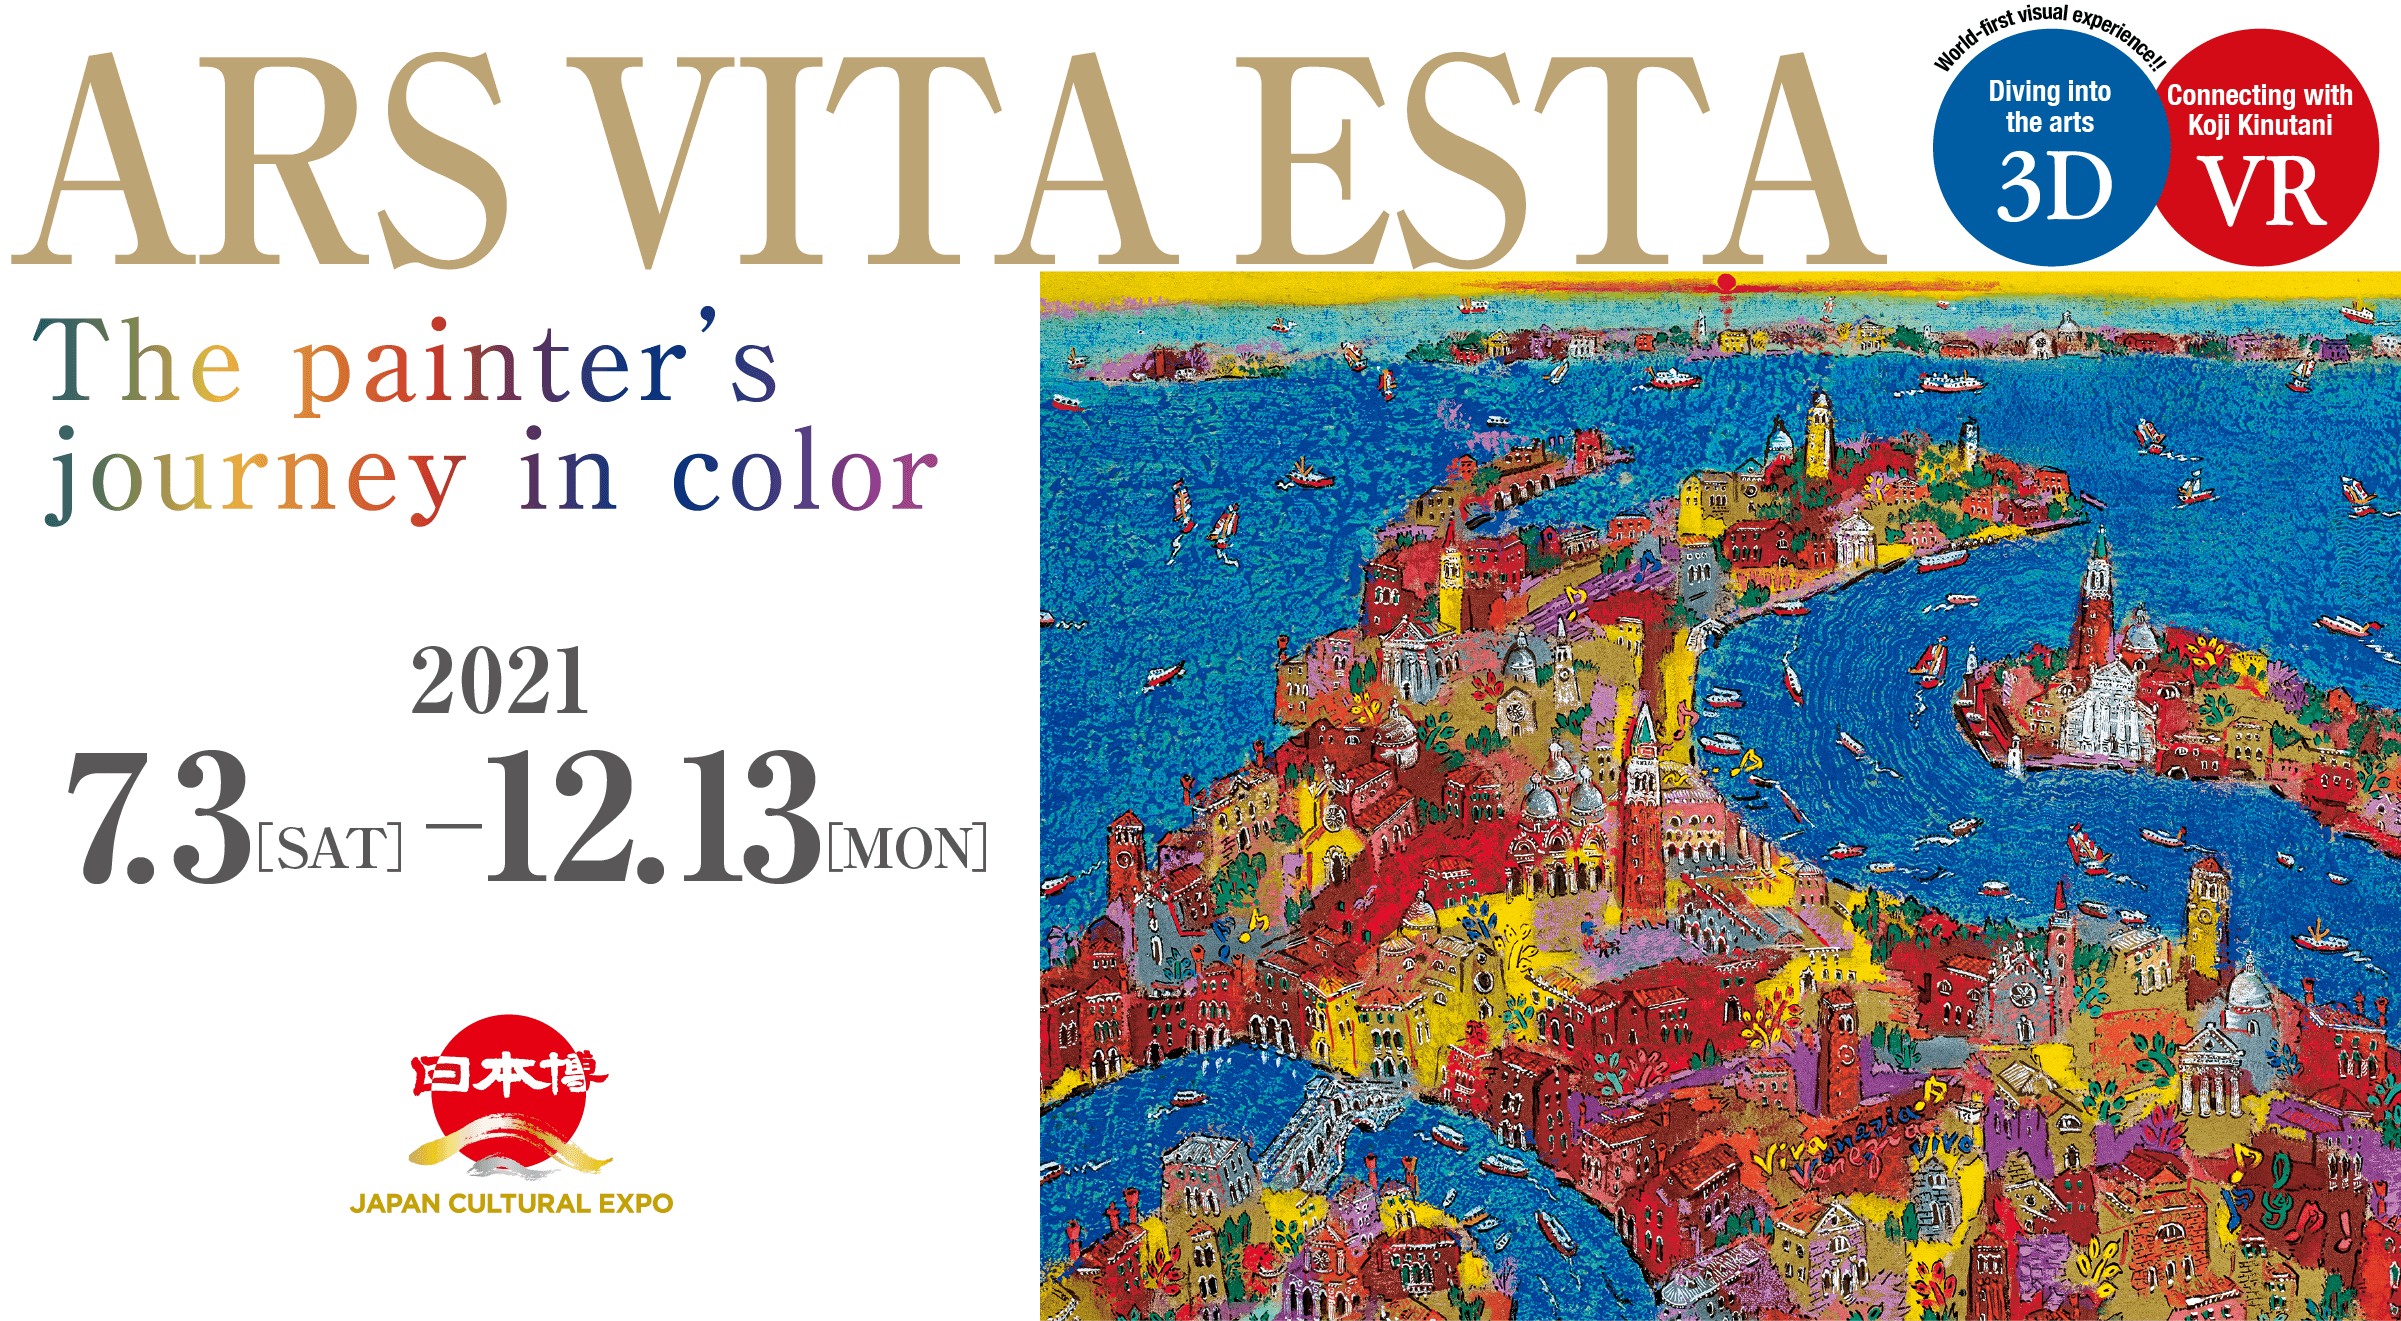 ARS VITA ESTA The painter's journey in color